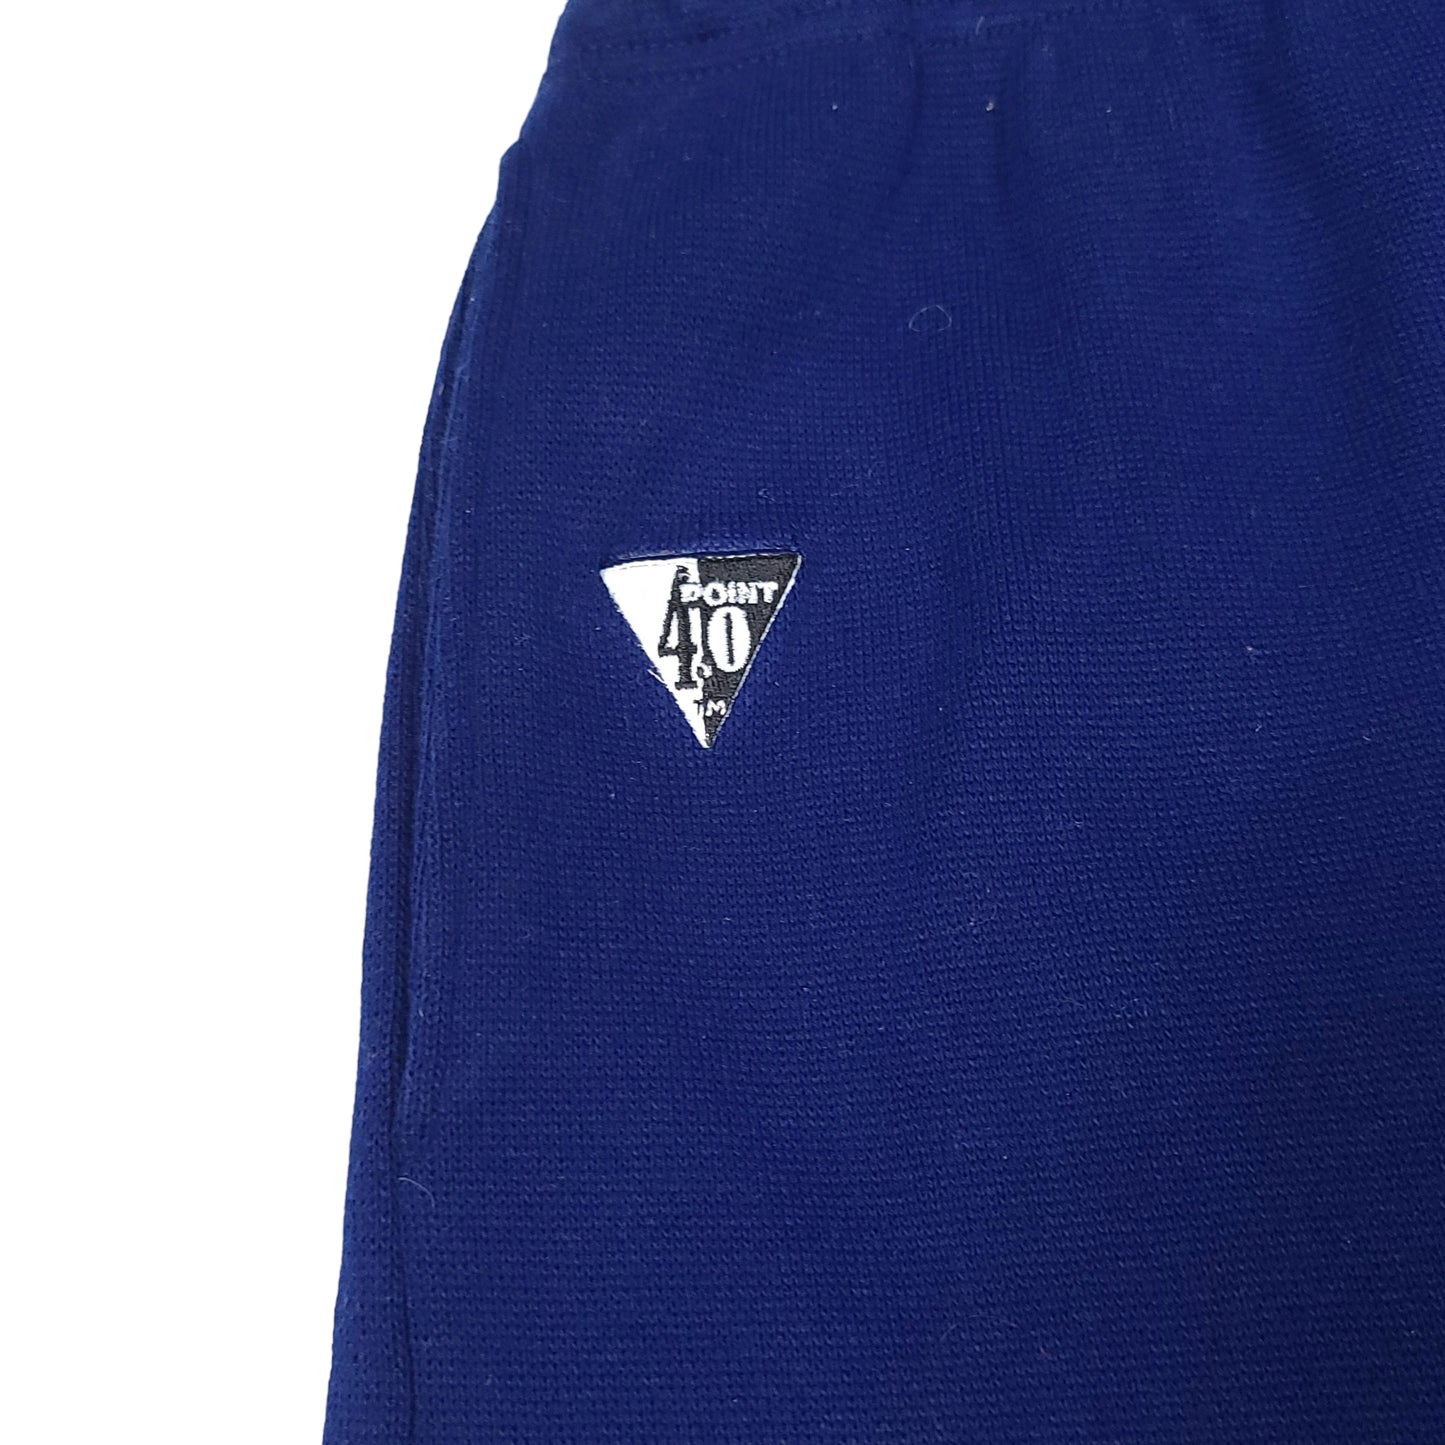 Vintage University of Illinois Blue Heavy Cotton 40 Point Shorts